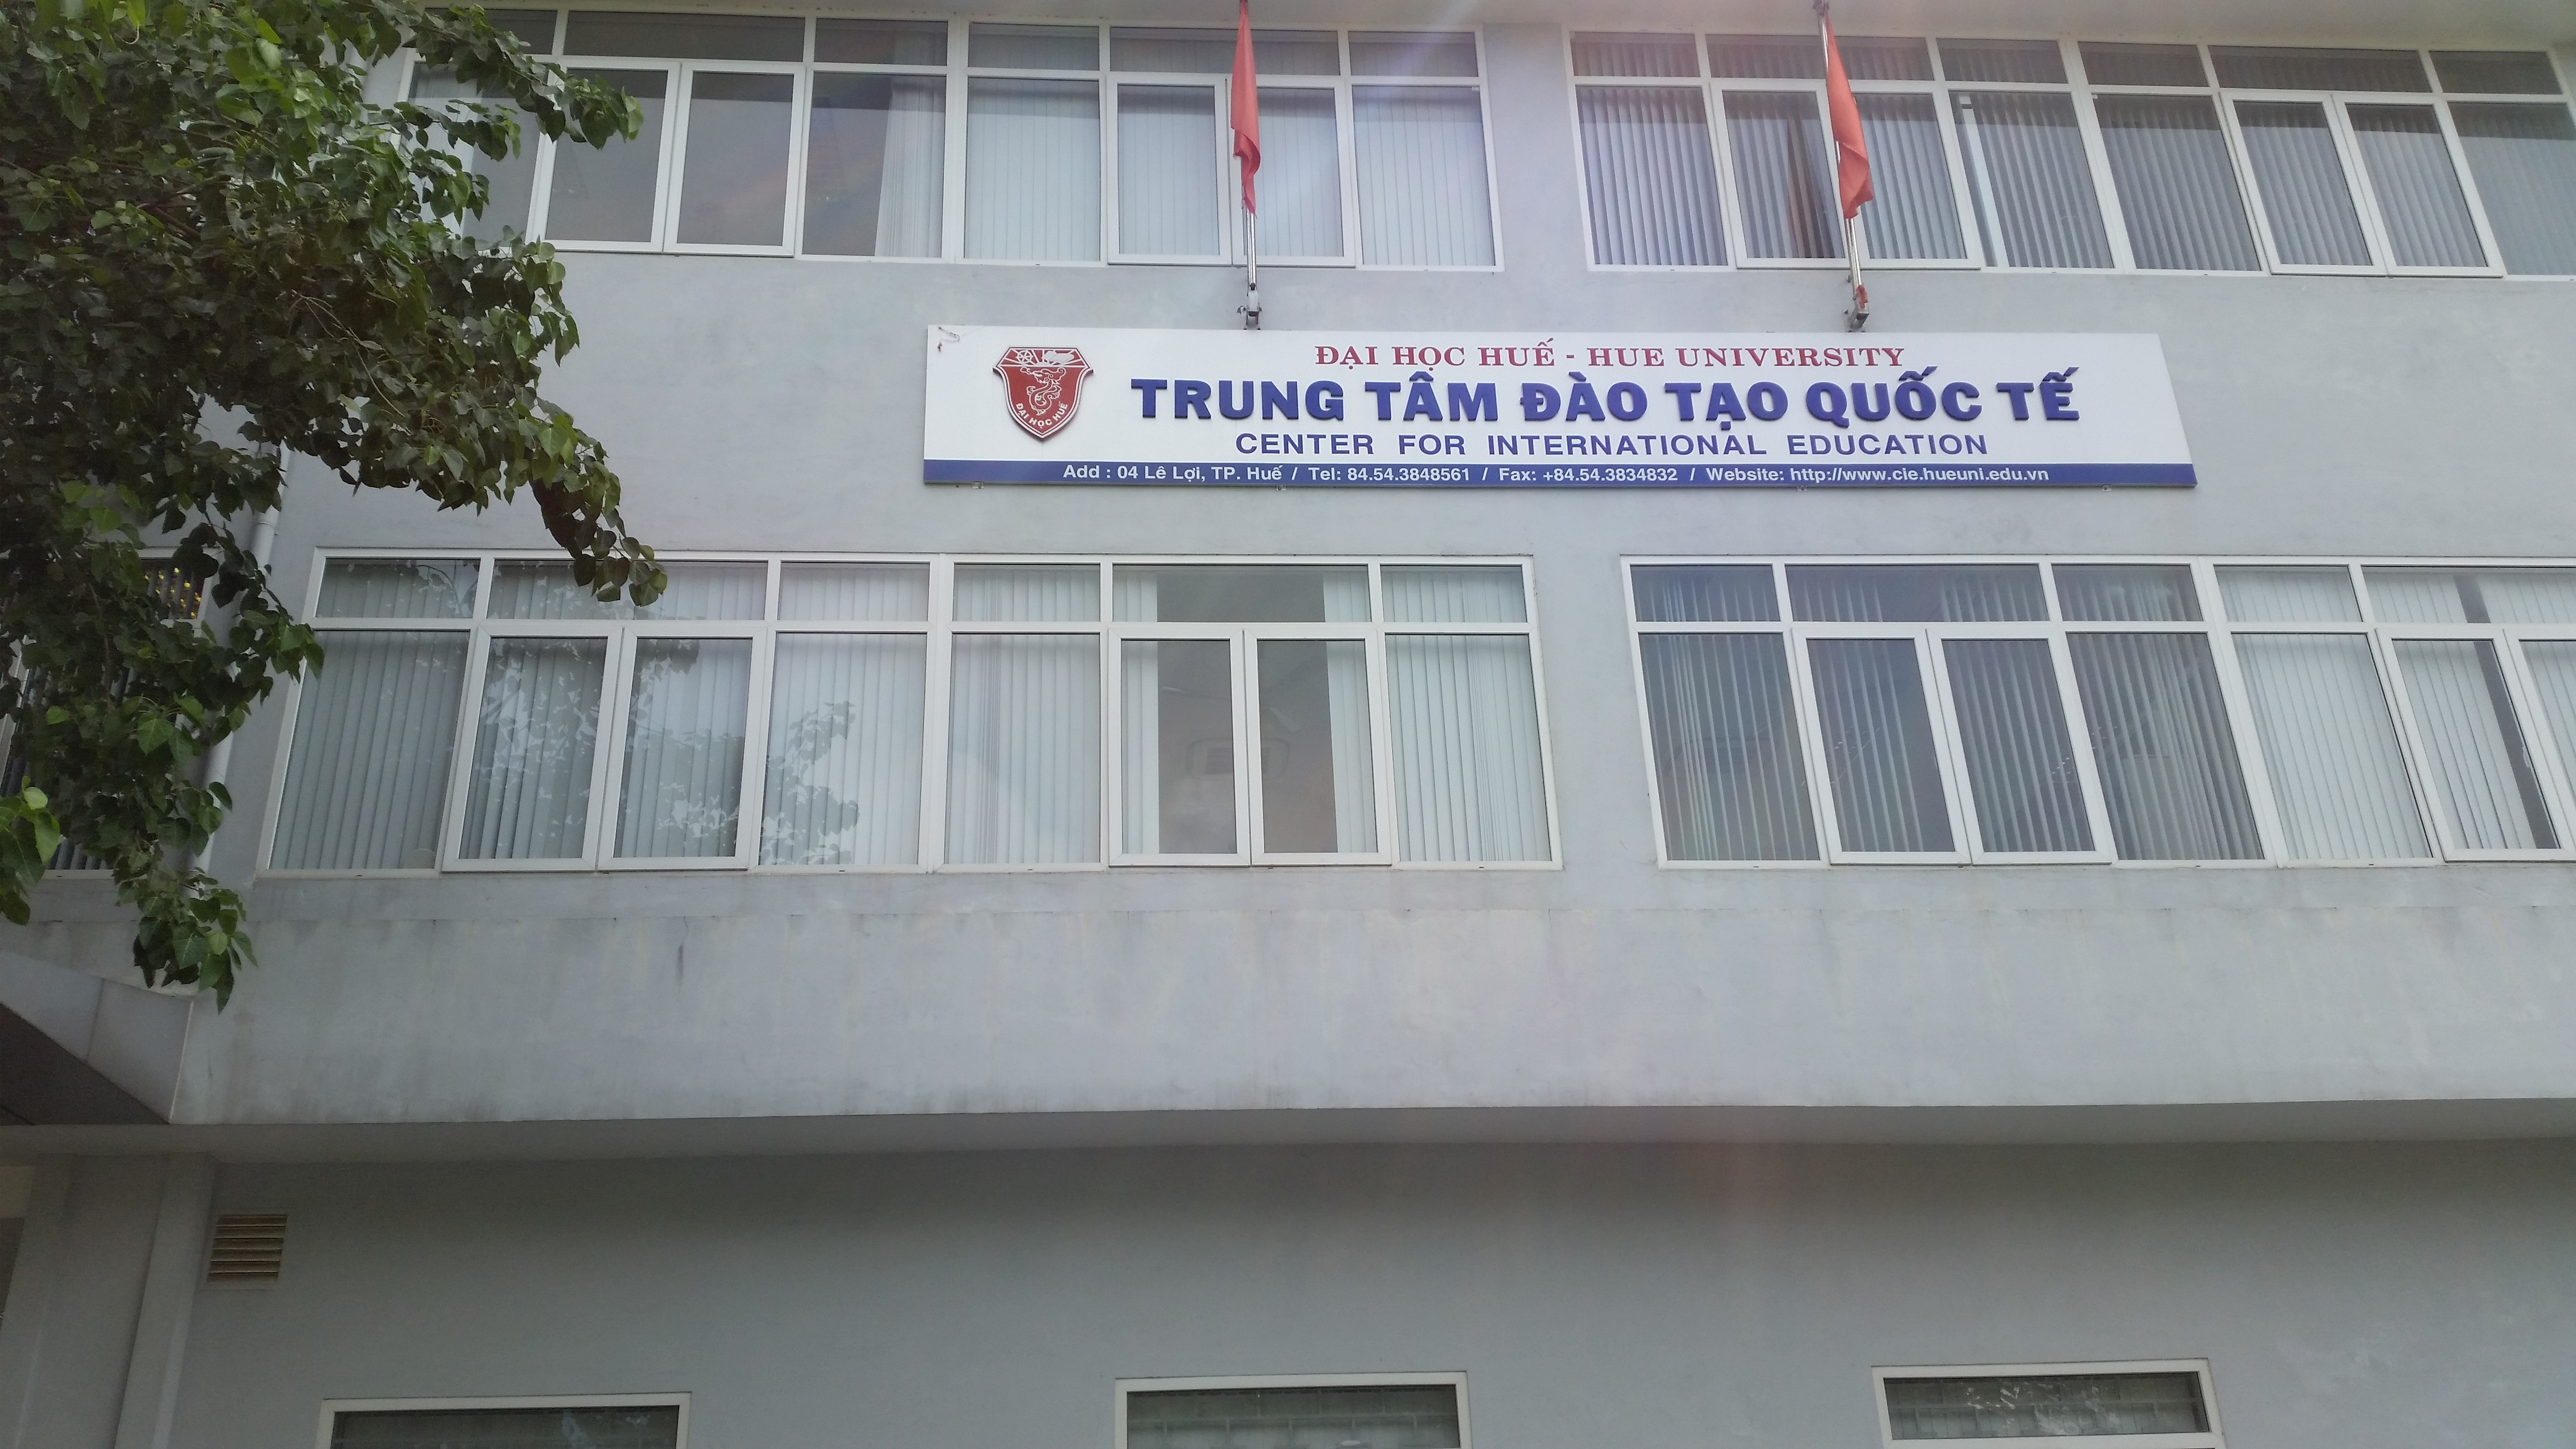 Centre for Inernational Education, Huế University